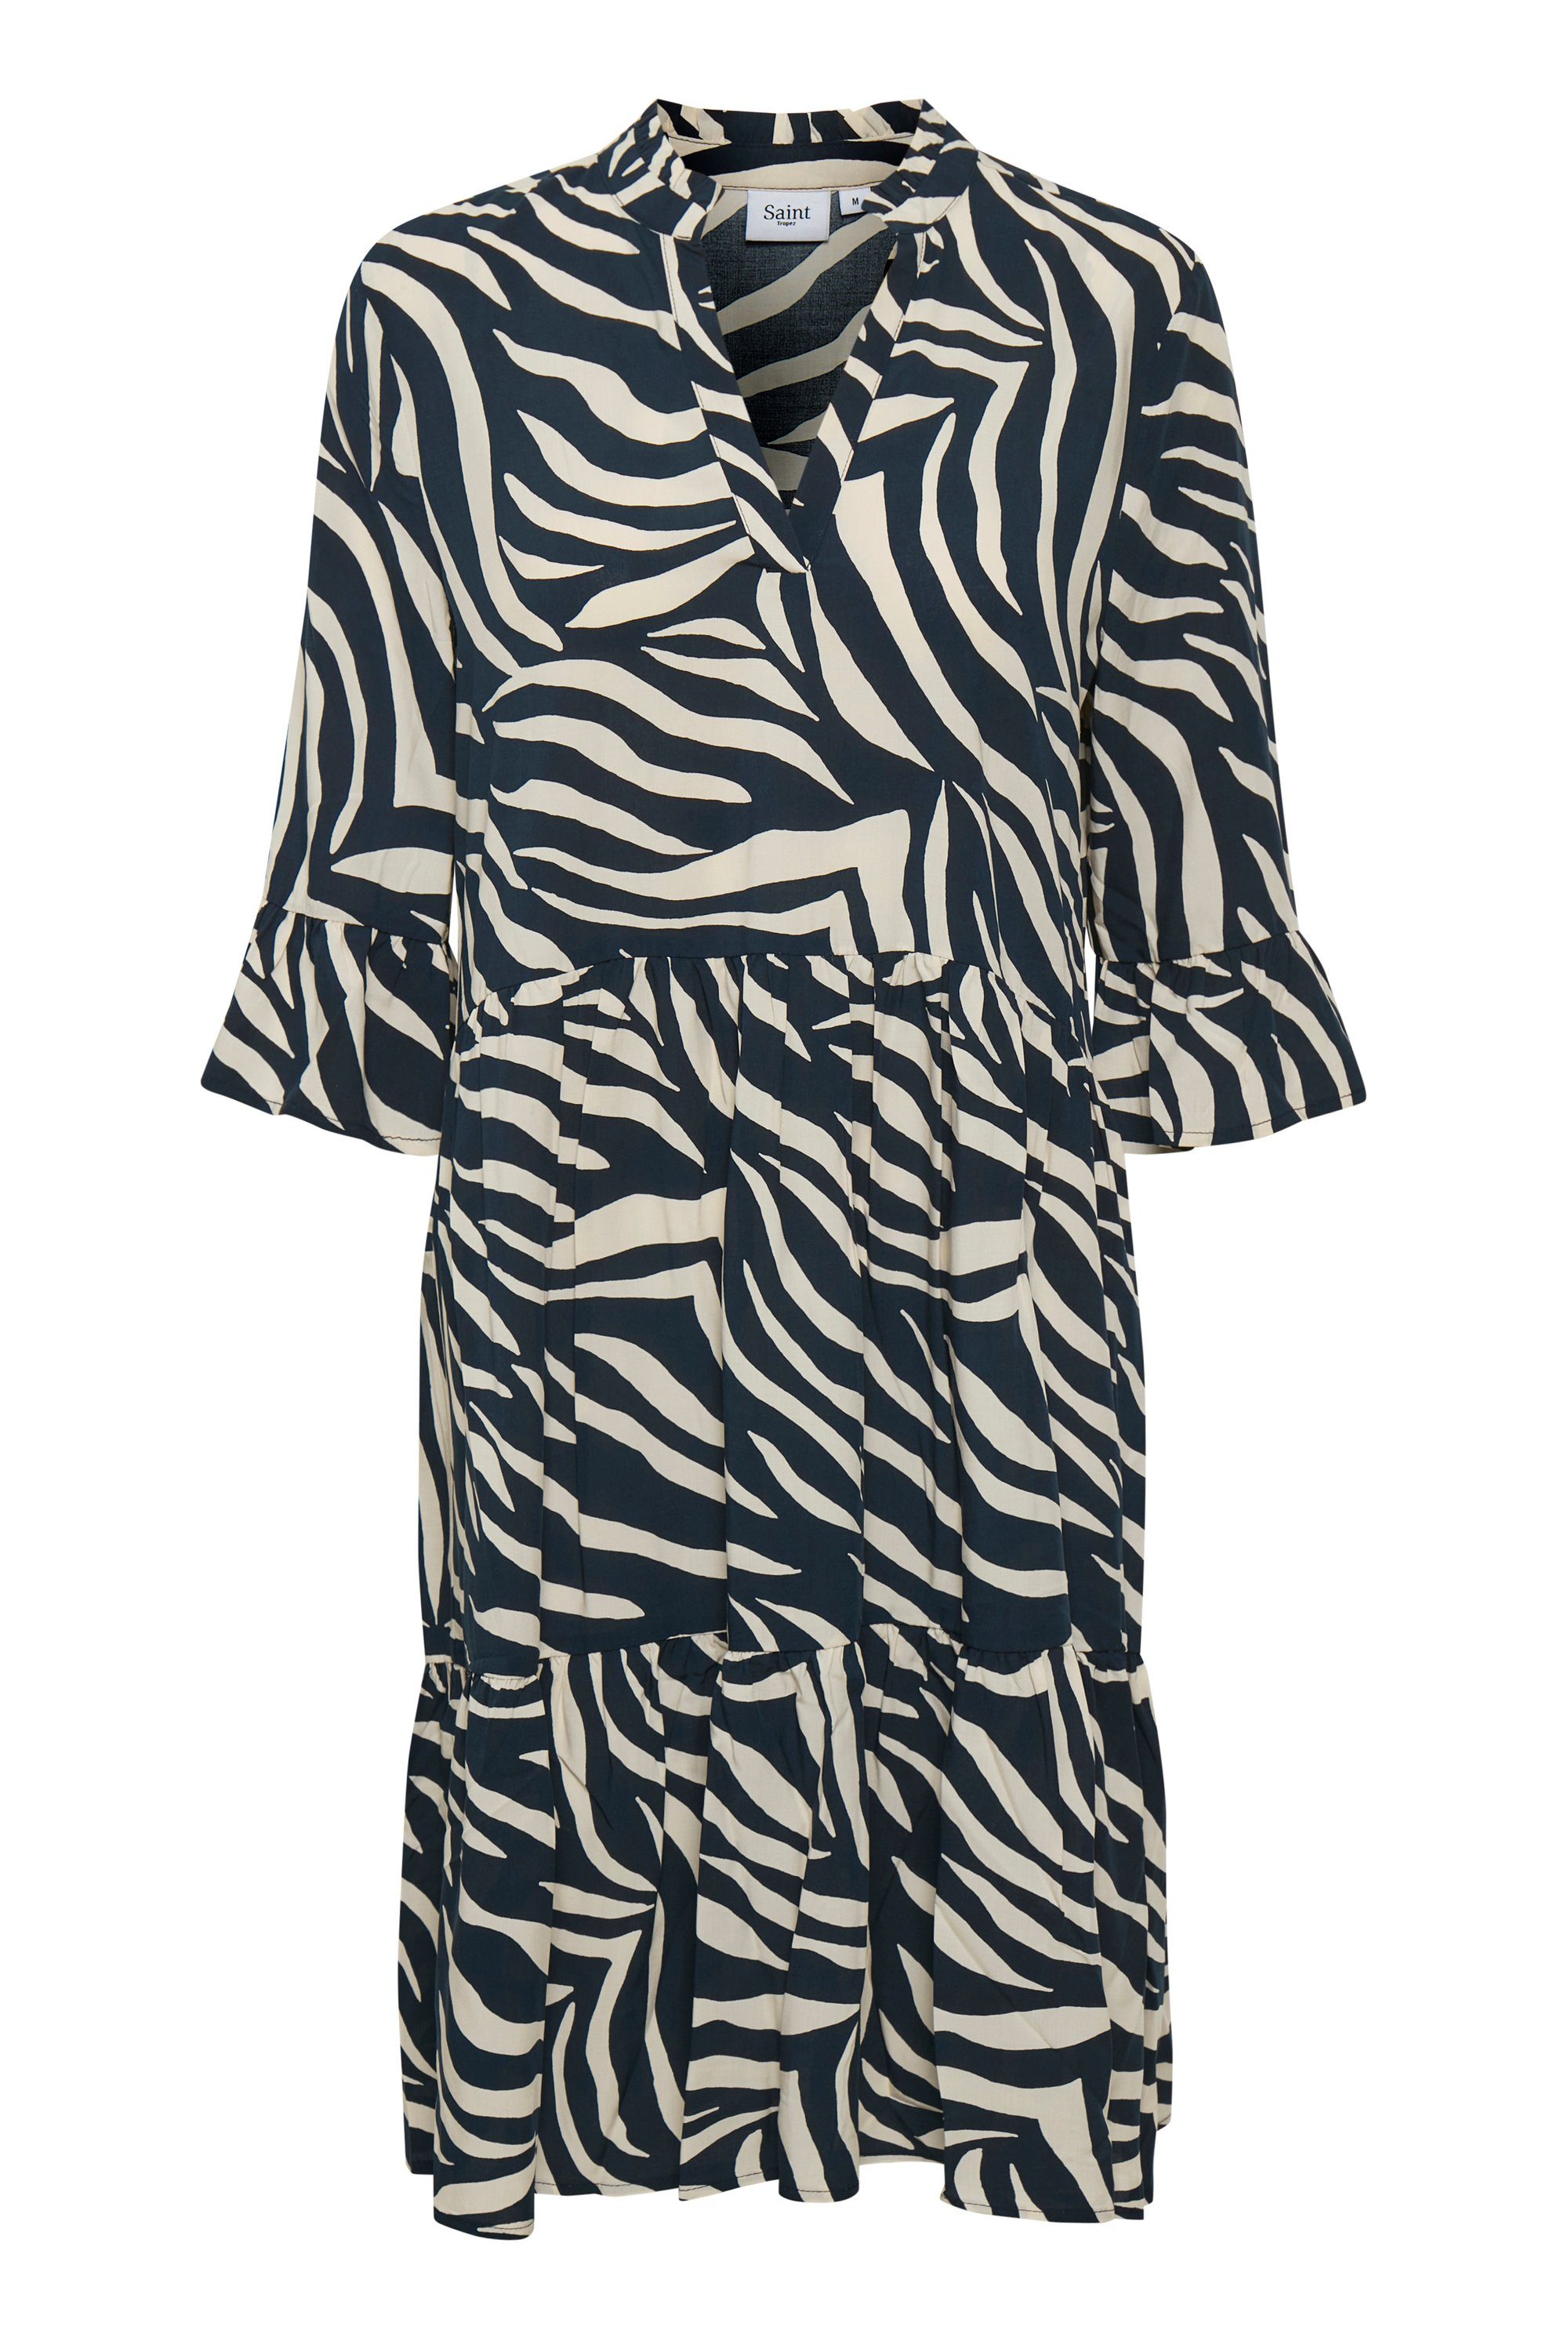 [Sonderangebot] Saint Tropez Jerseykleid Dress Zebra Skin Total Eclipse EdaSZ